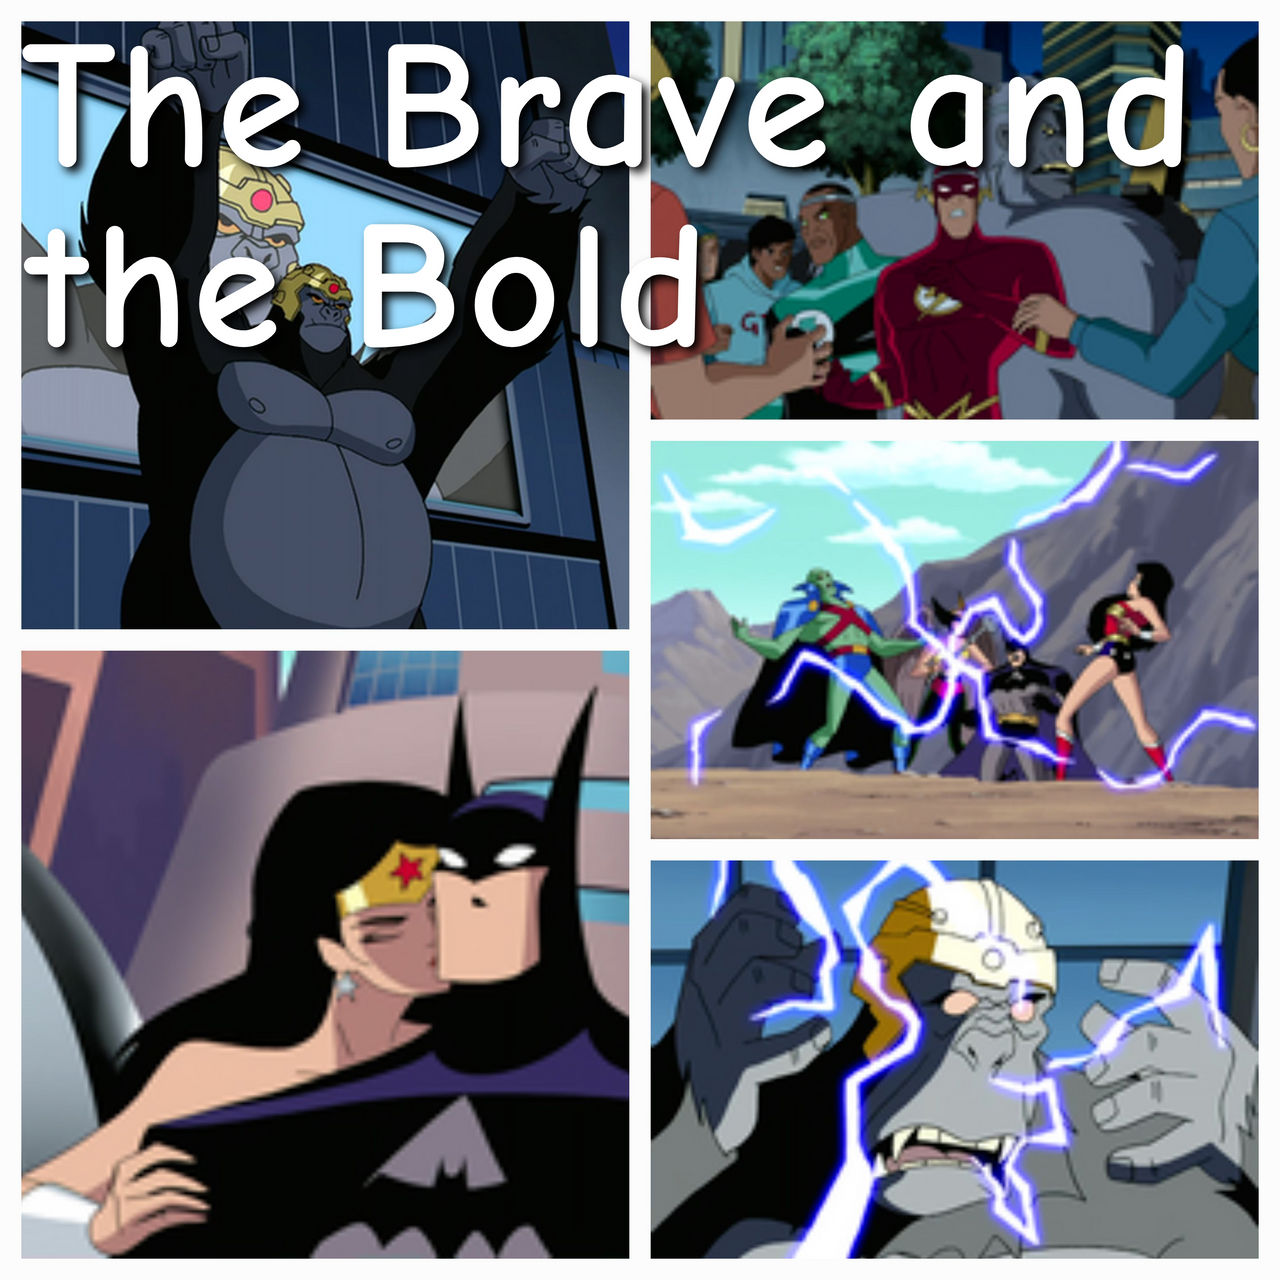 Justice League The Brave and the Bold by xxxkayceejrxxx on DeviantArt